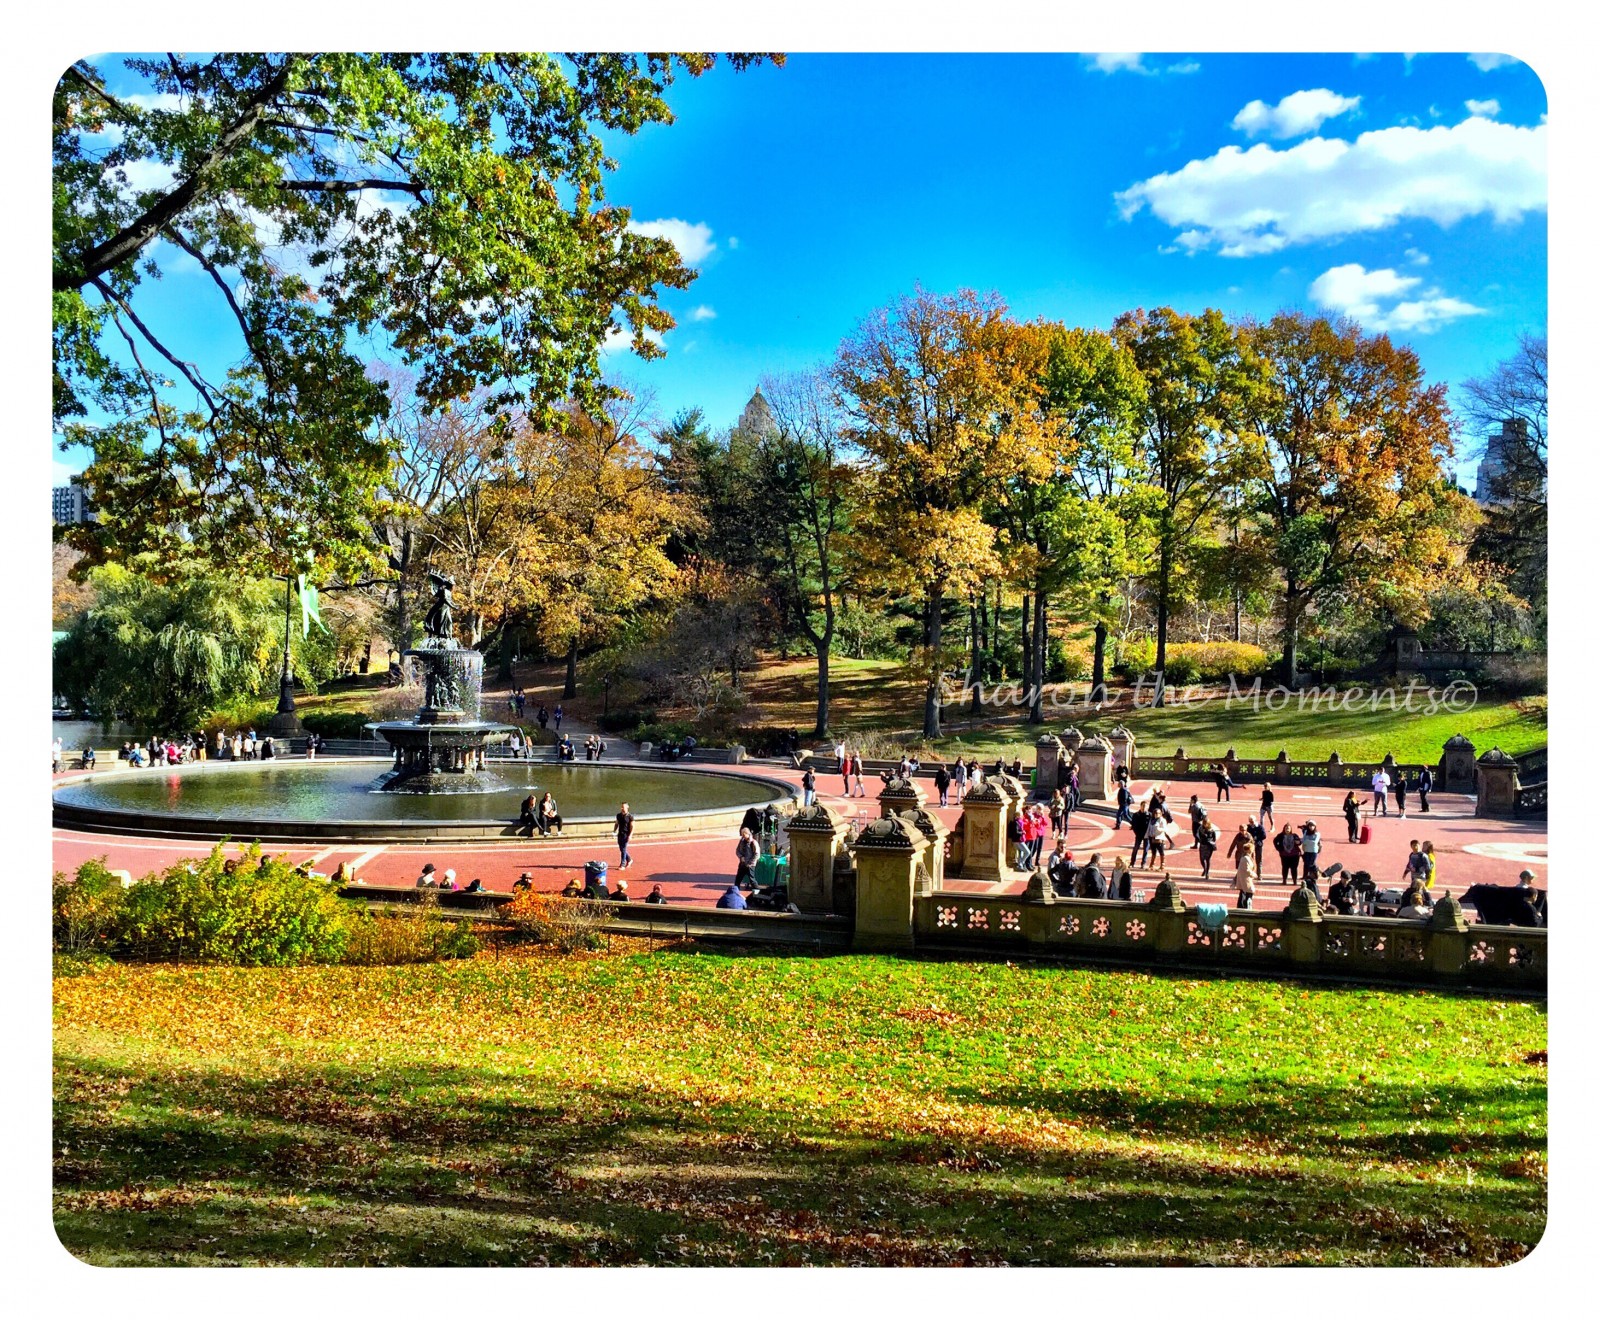 Central Park in New York City Hidden Gem| Sharon the Moments Blog